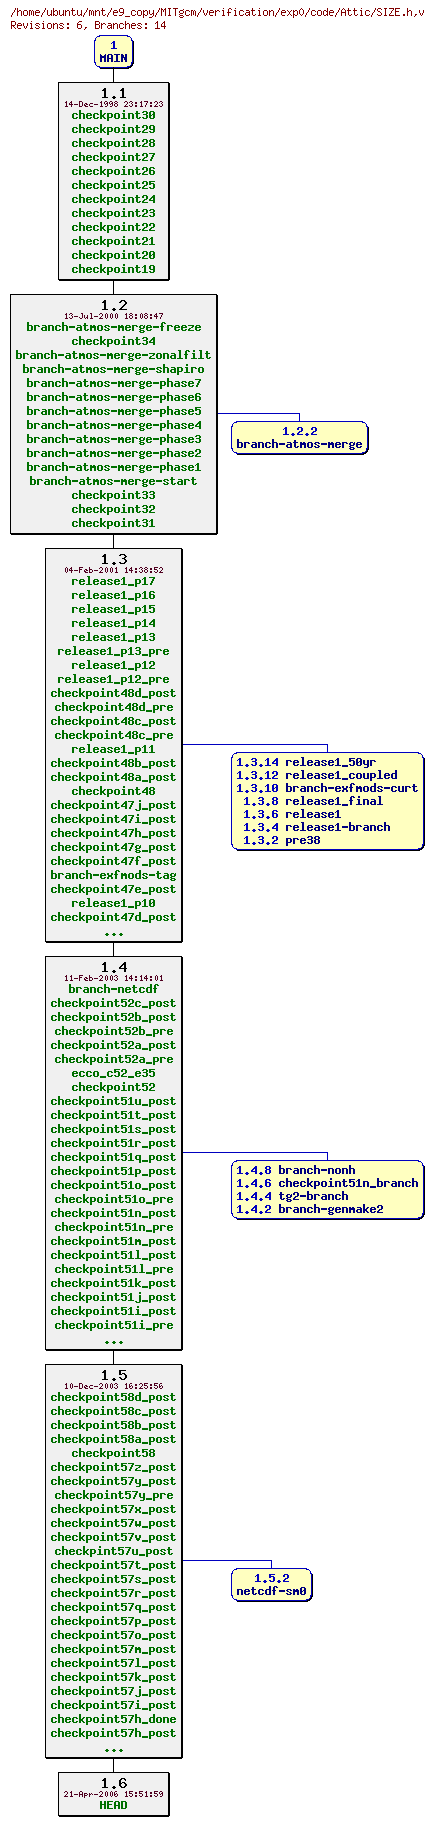 Revisions of MITgcm/verification/exp0/code/SIZE.h